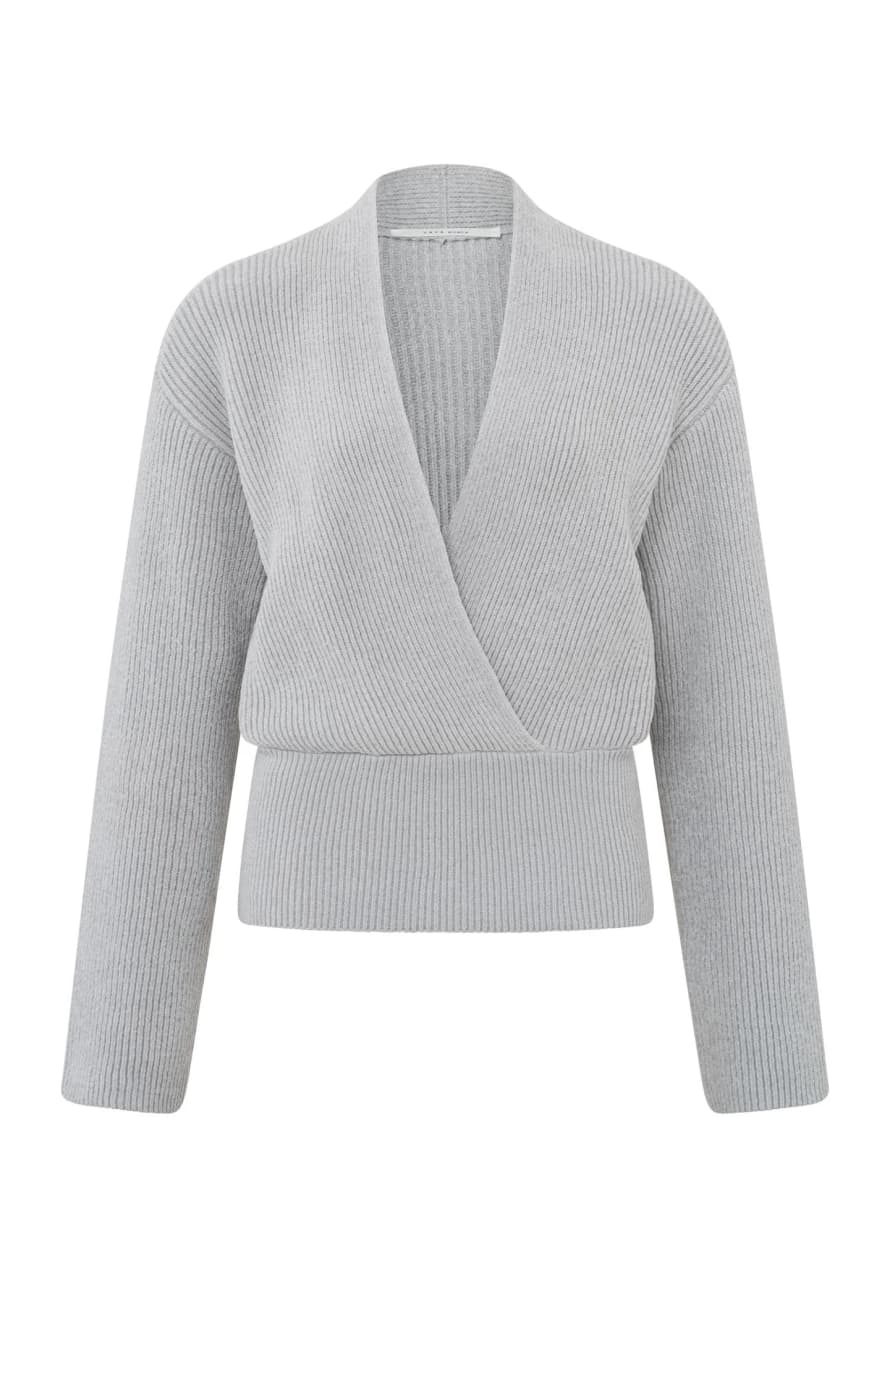 Yaya Cropped Wrap Sweater Wide Sleeves | Harbor Mist Grey